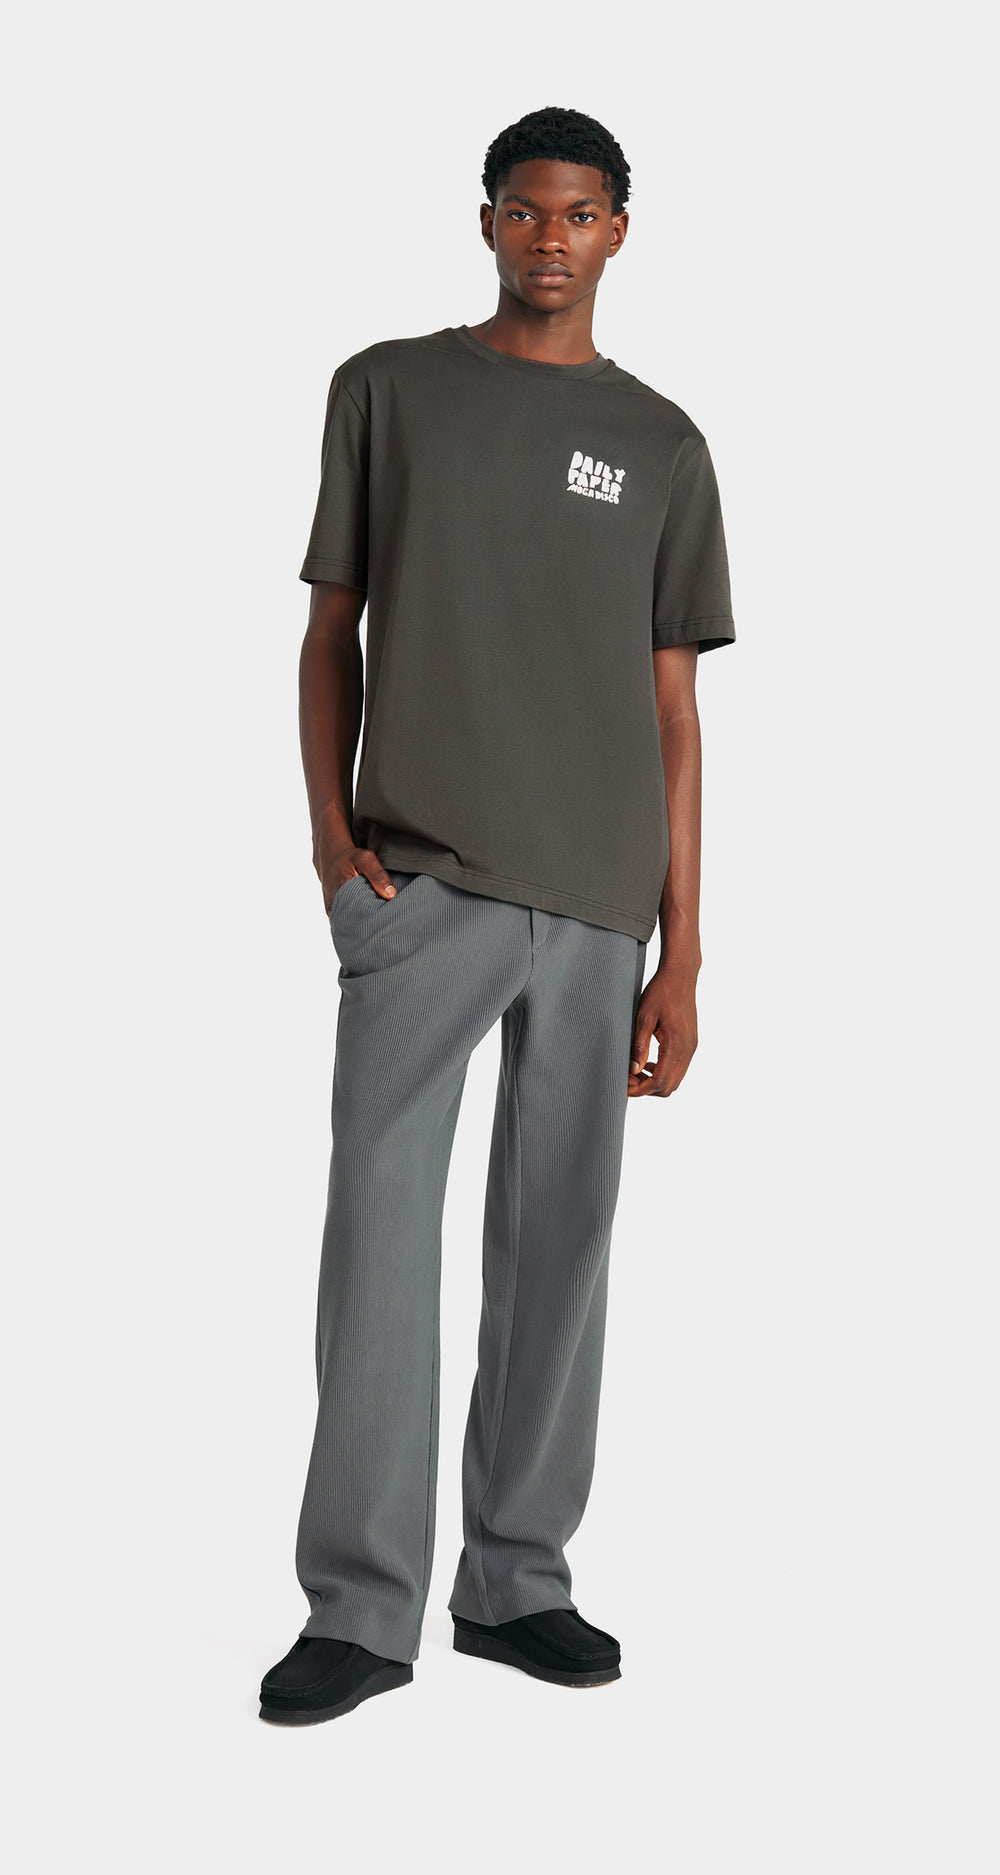 DP - Ash Grey Halim T-Shirt - Men - Rear